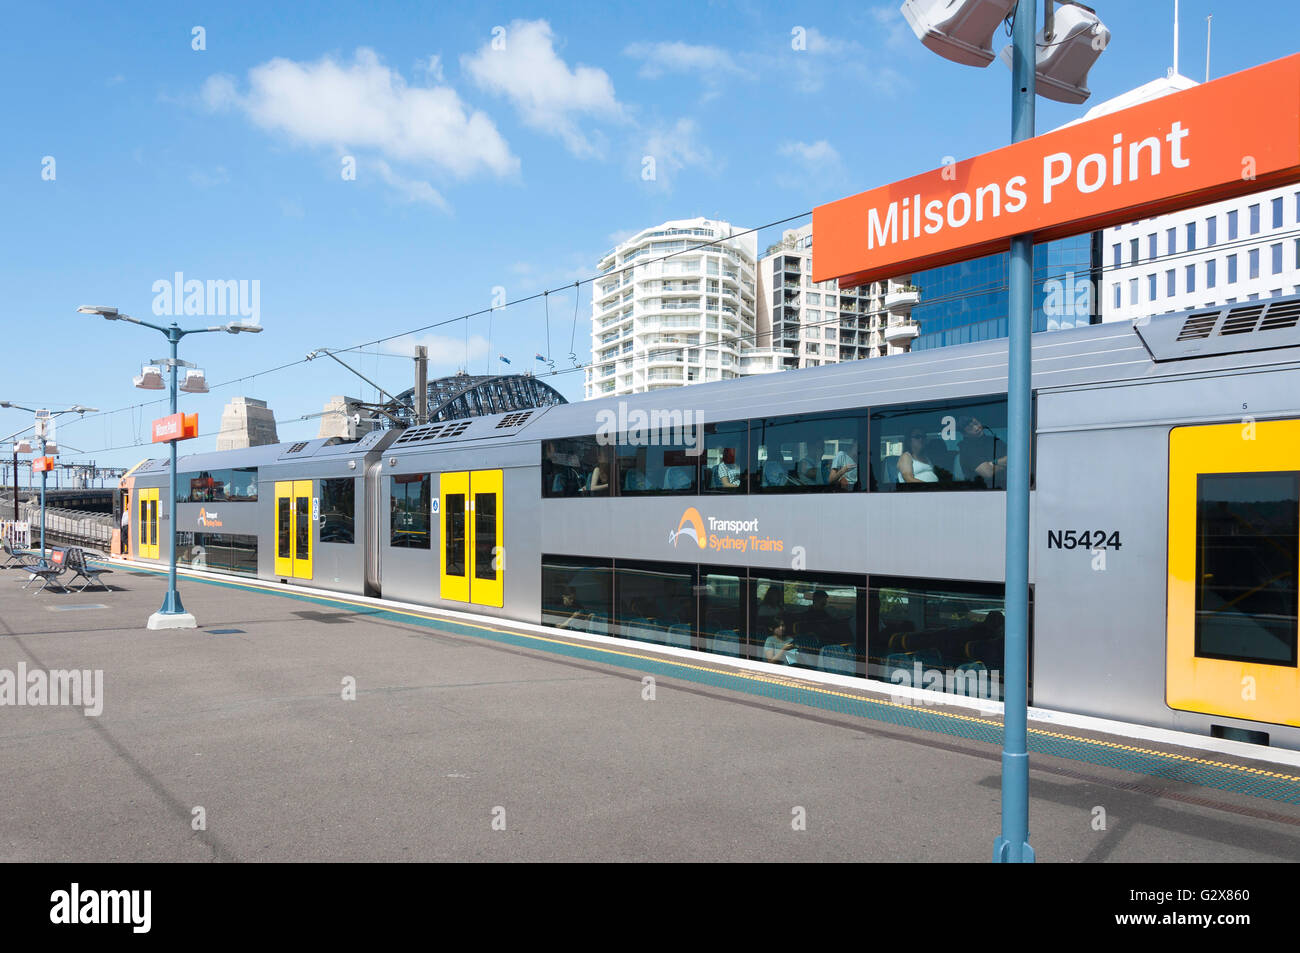 Milsons Point Station platform on Sydney Train Network, Milsons Point, Sydney, New South Wales, Australia Stock Photo